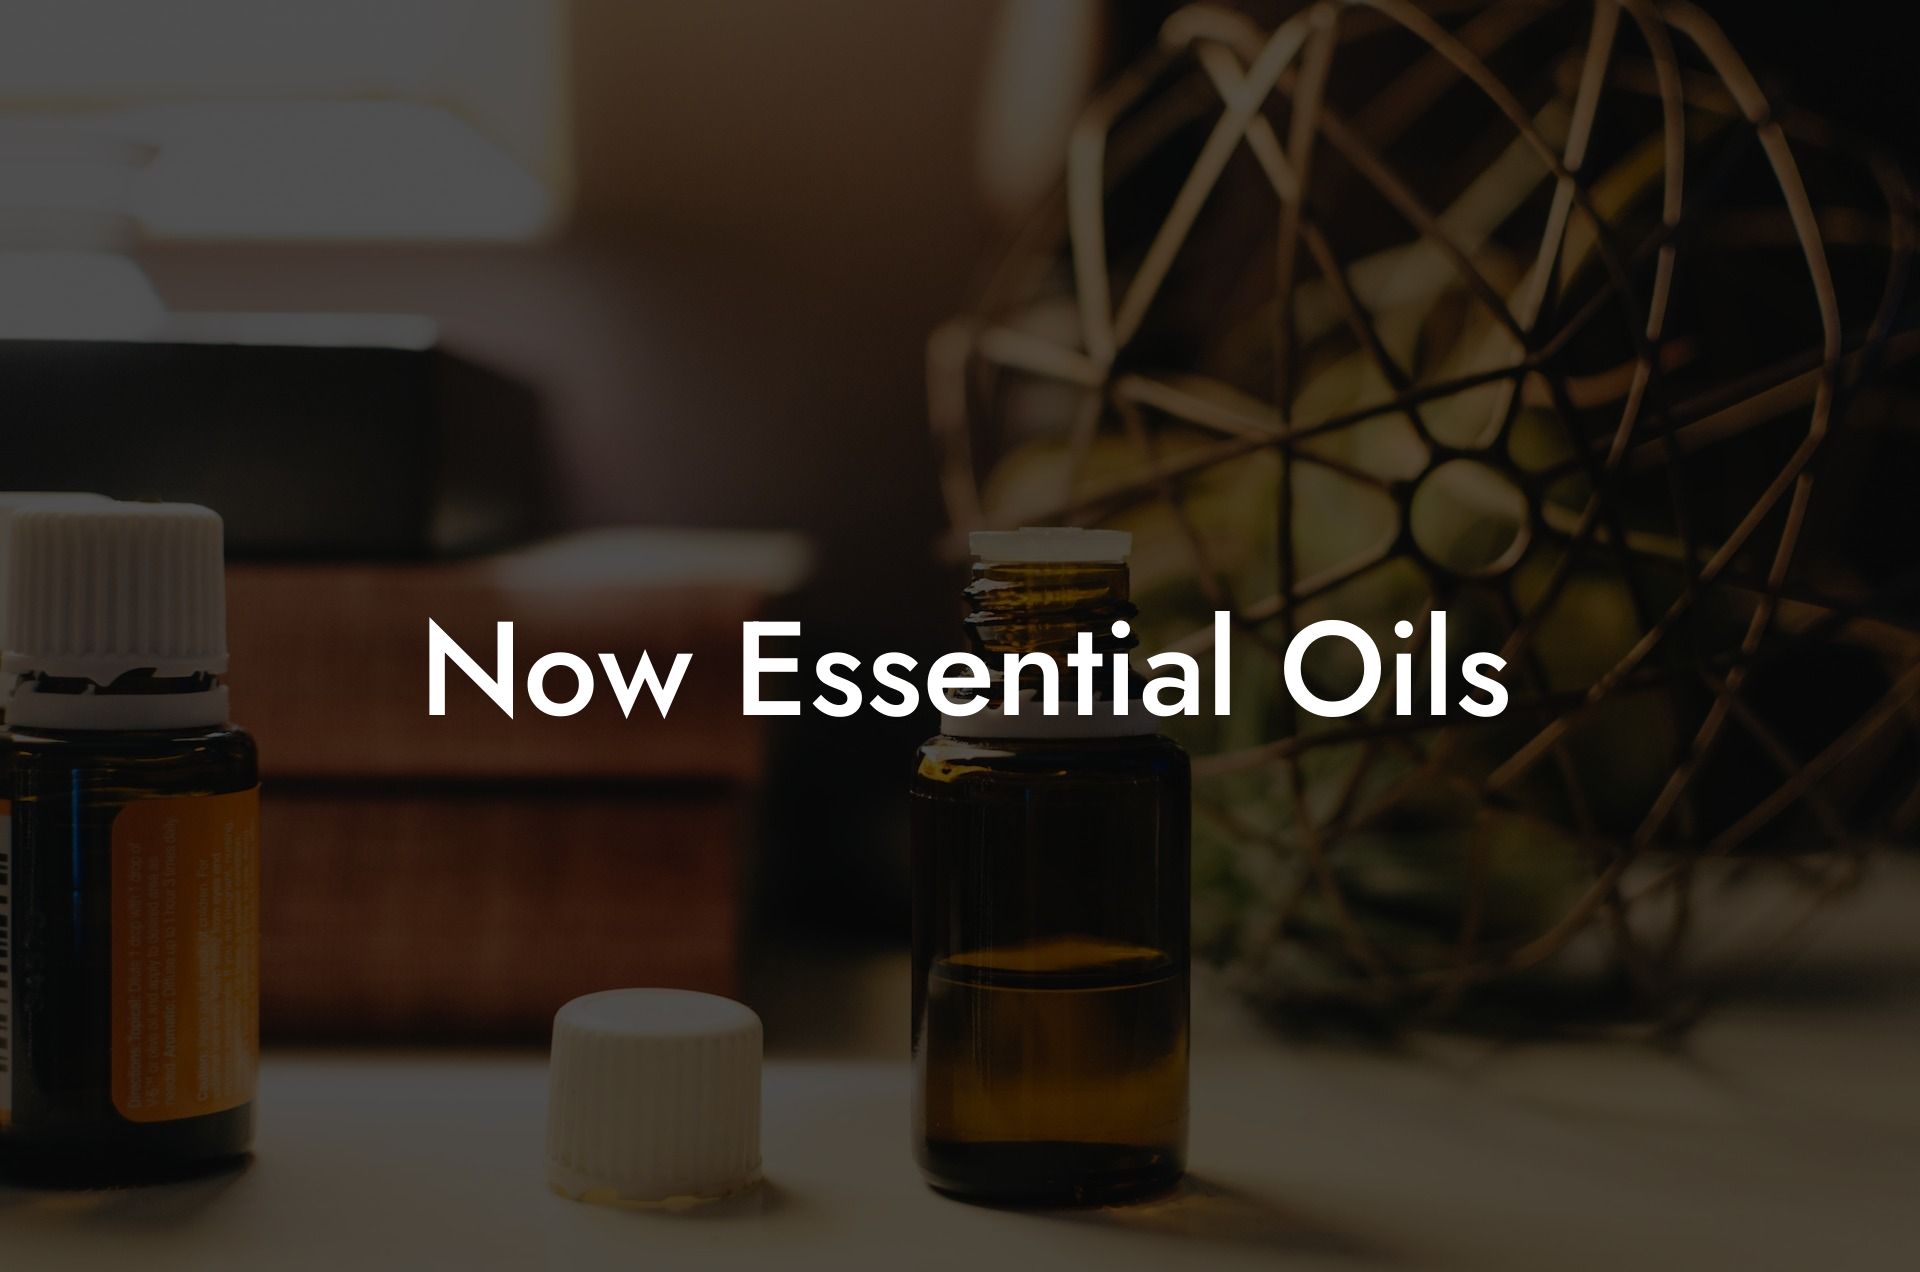 Now Essential Oils